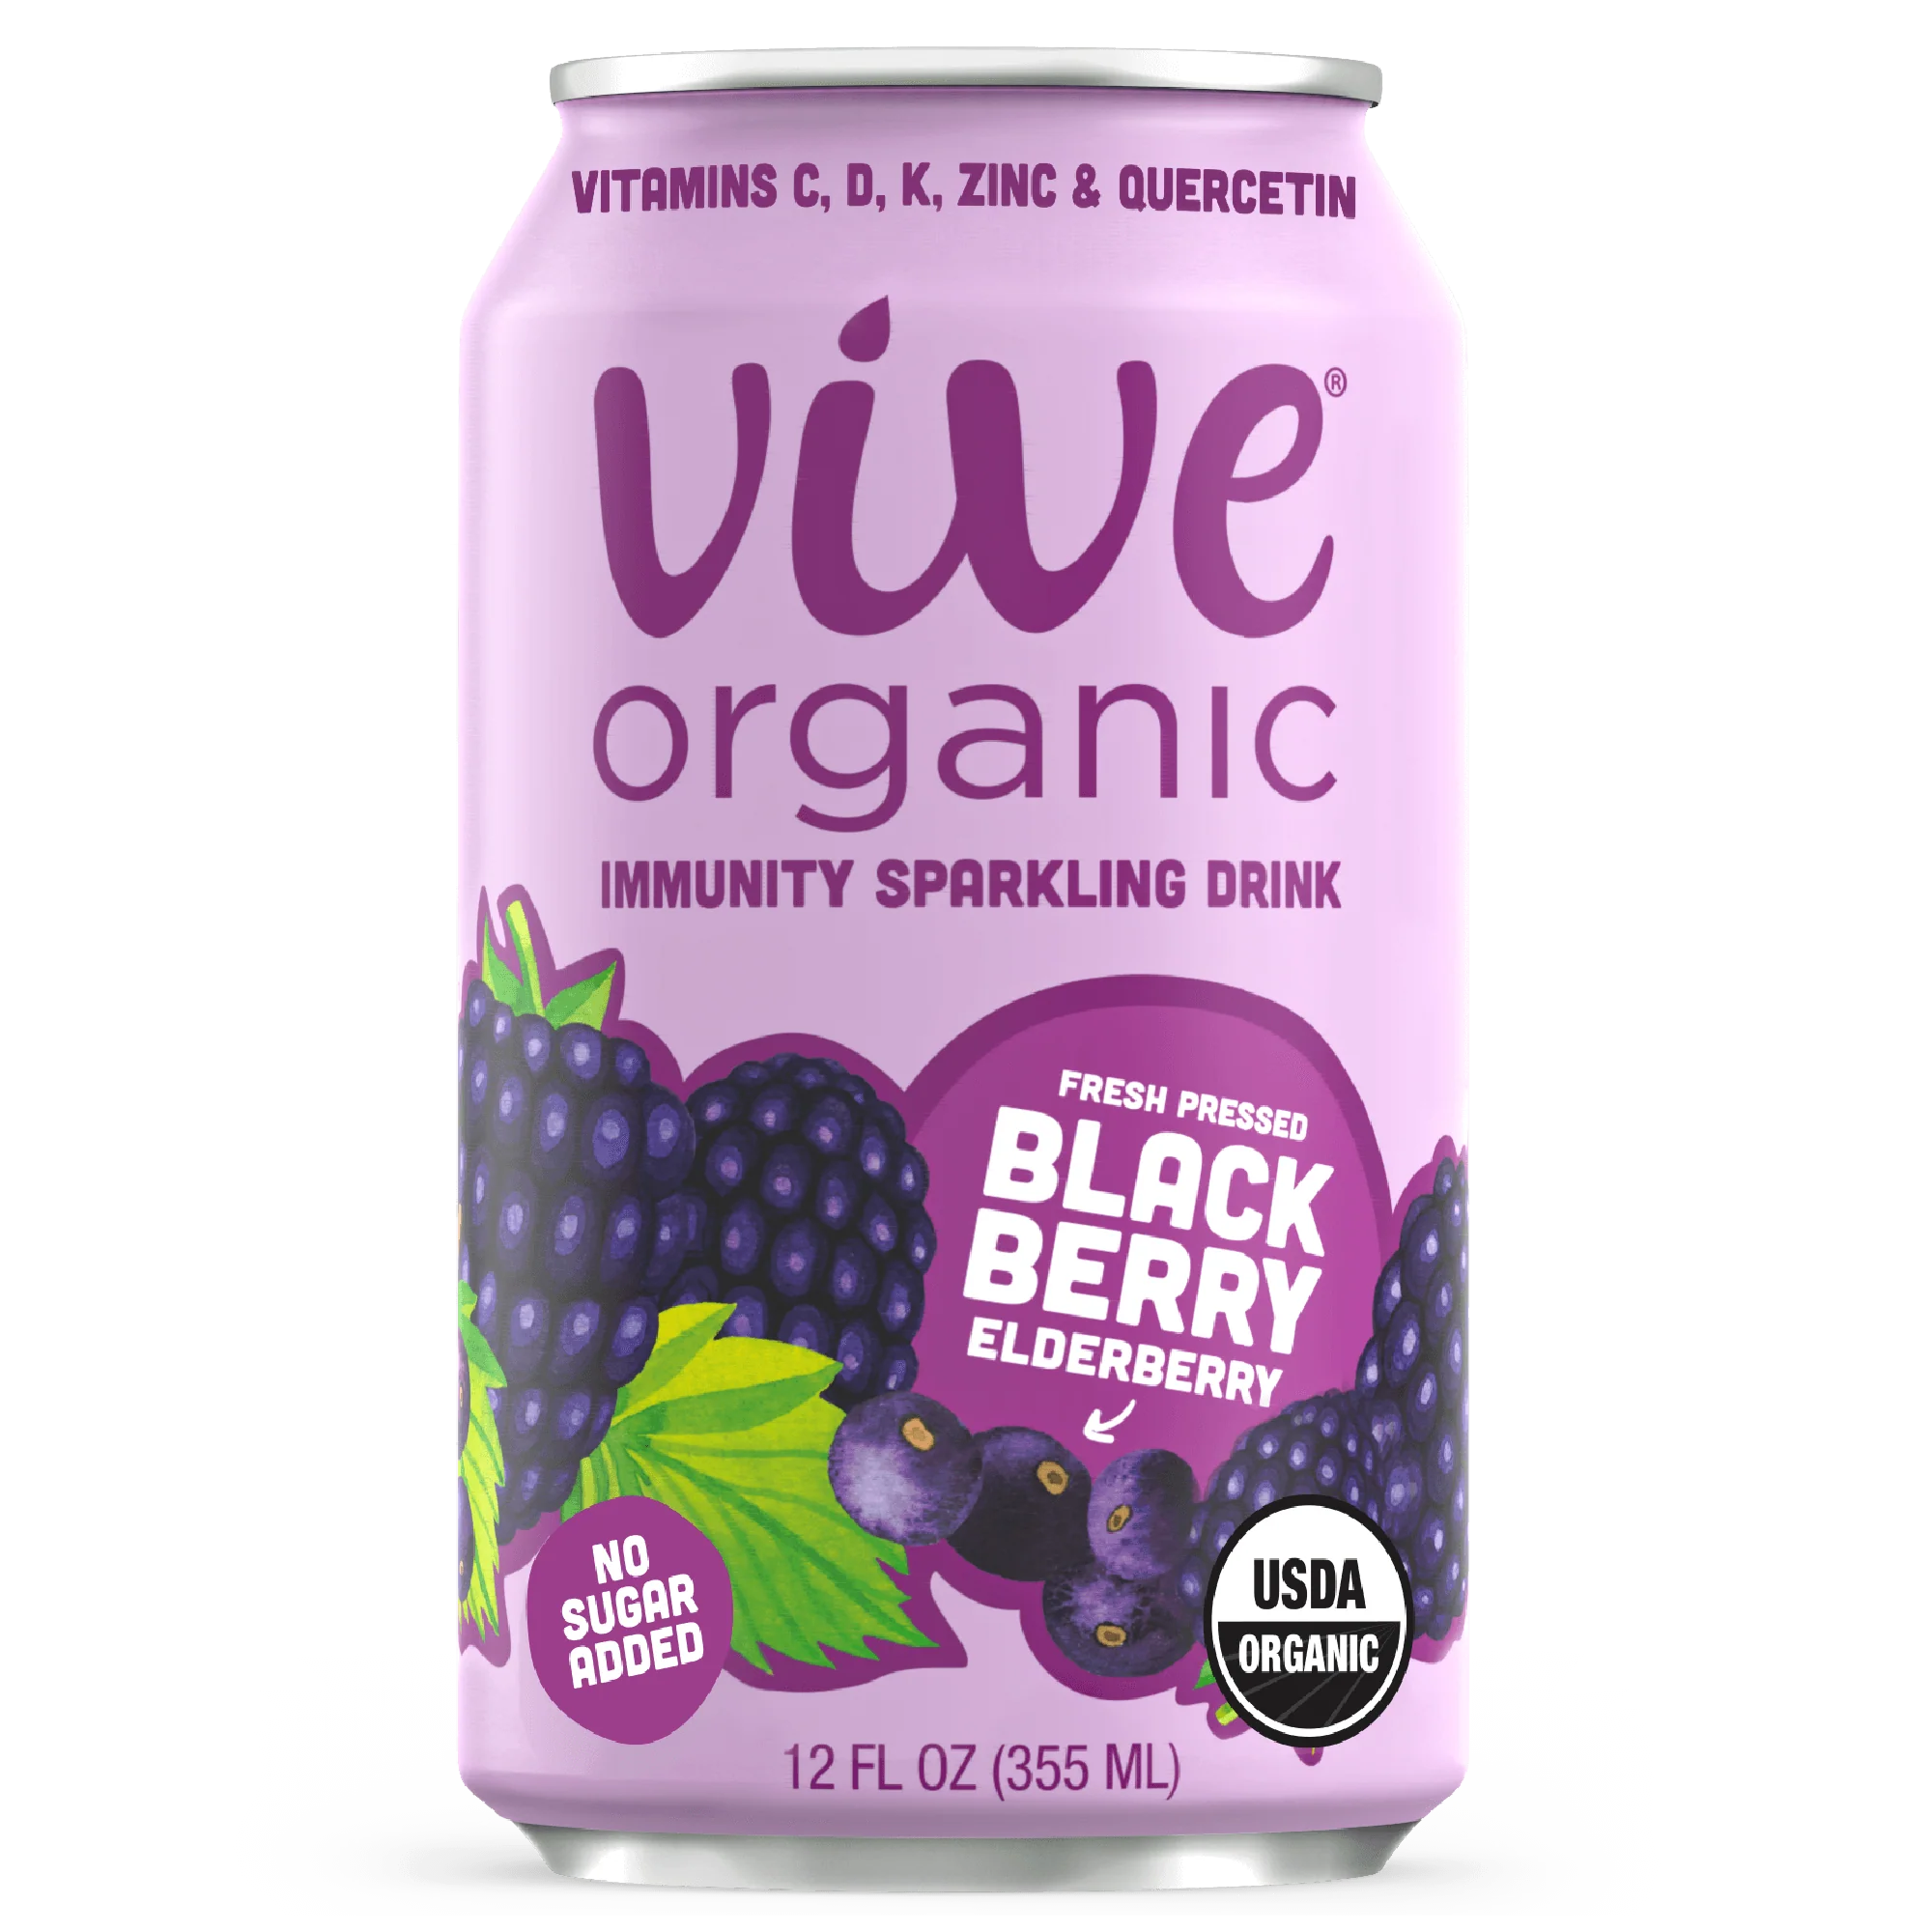 Organic Blackberry Elderberry Immunity Sparkling Drink - 12 FO